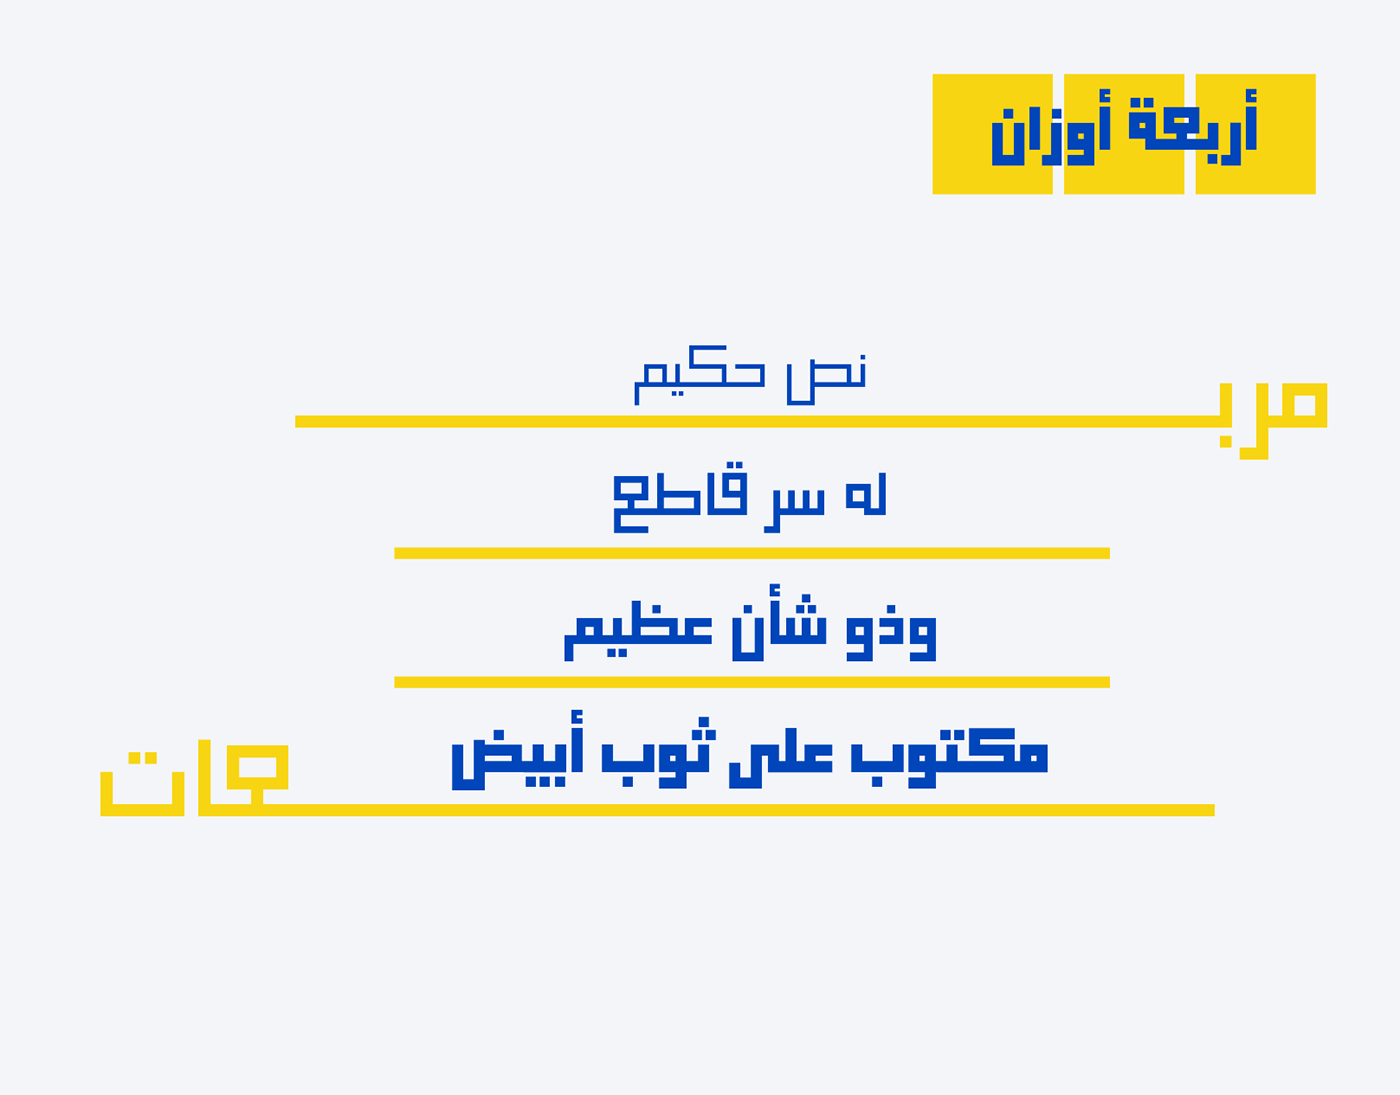 arabic arabic font Arabic Typeface font free morabaat Typeface typographic خط عربي مجاني